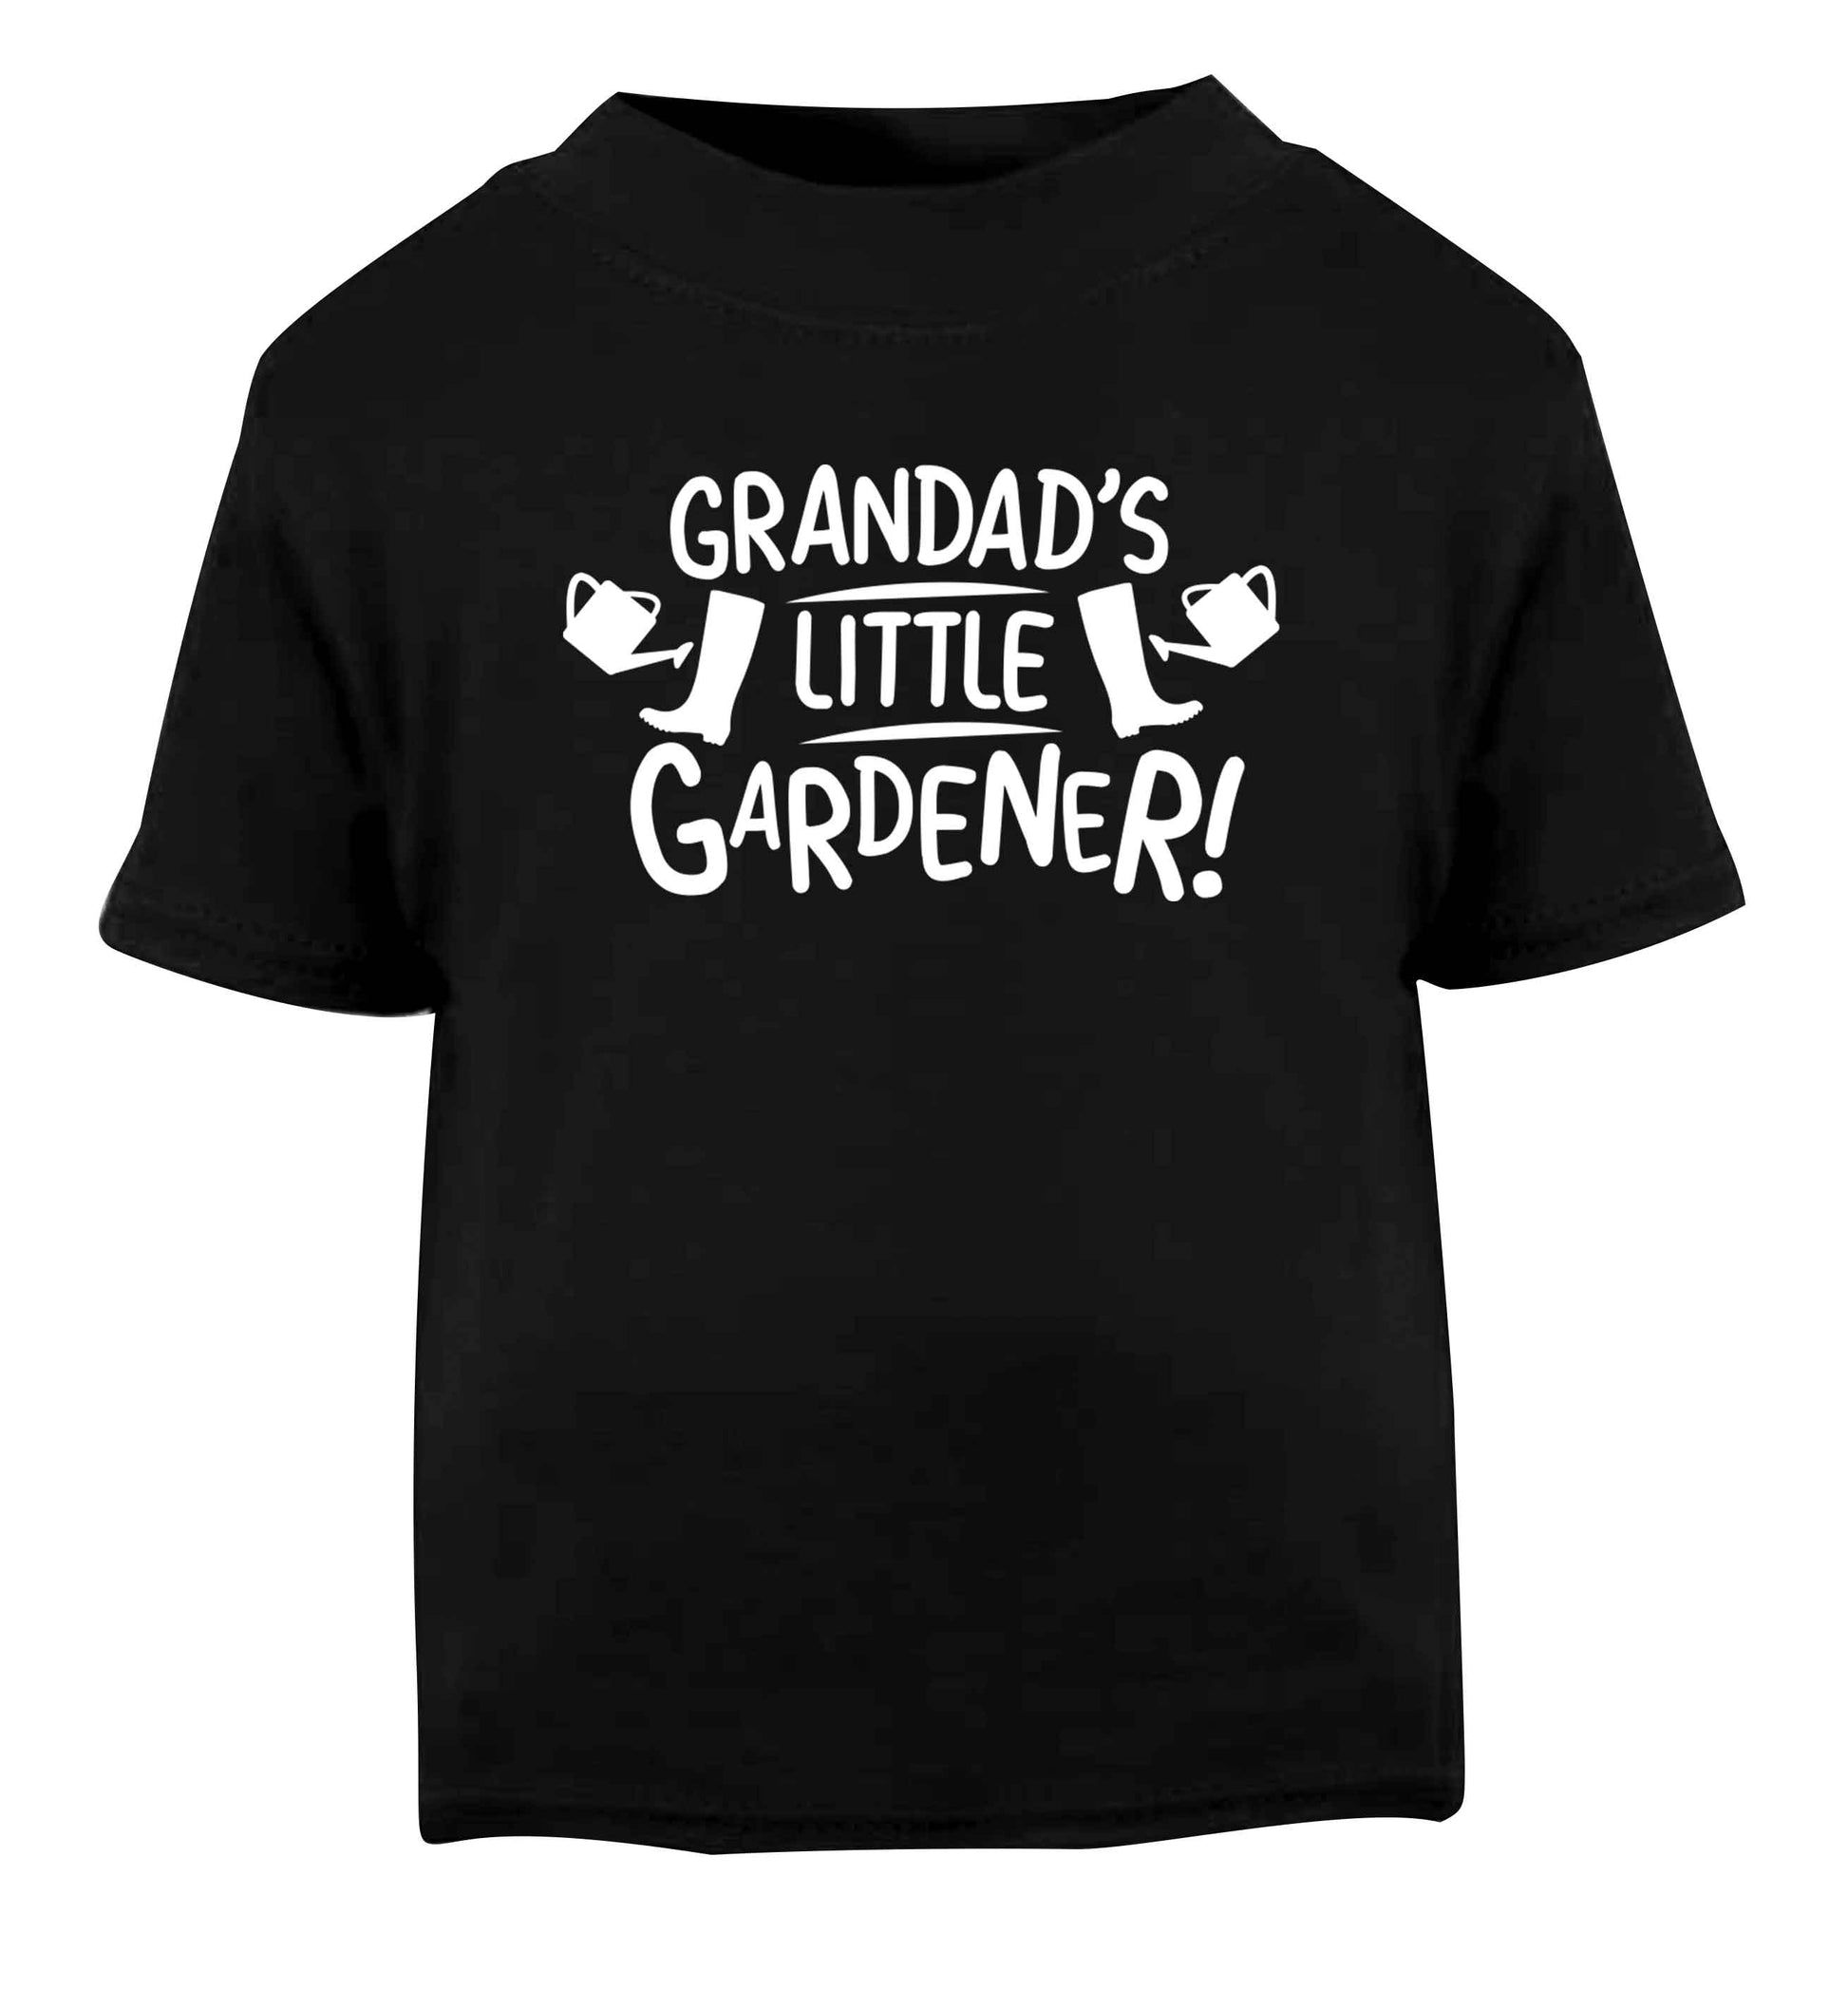 Grandad's little gardener Black Baby Toddler Tshirt 2 years